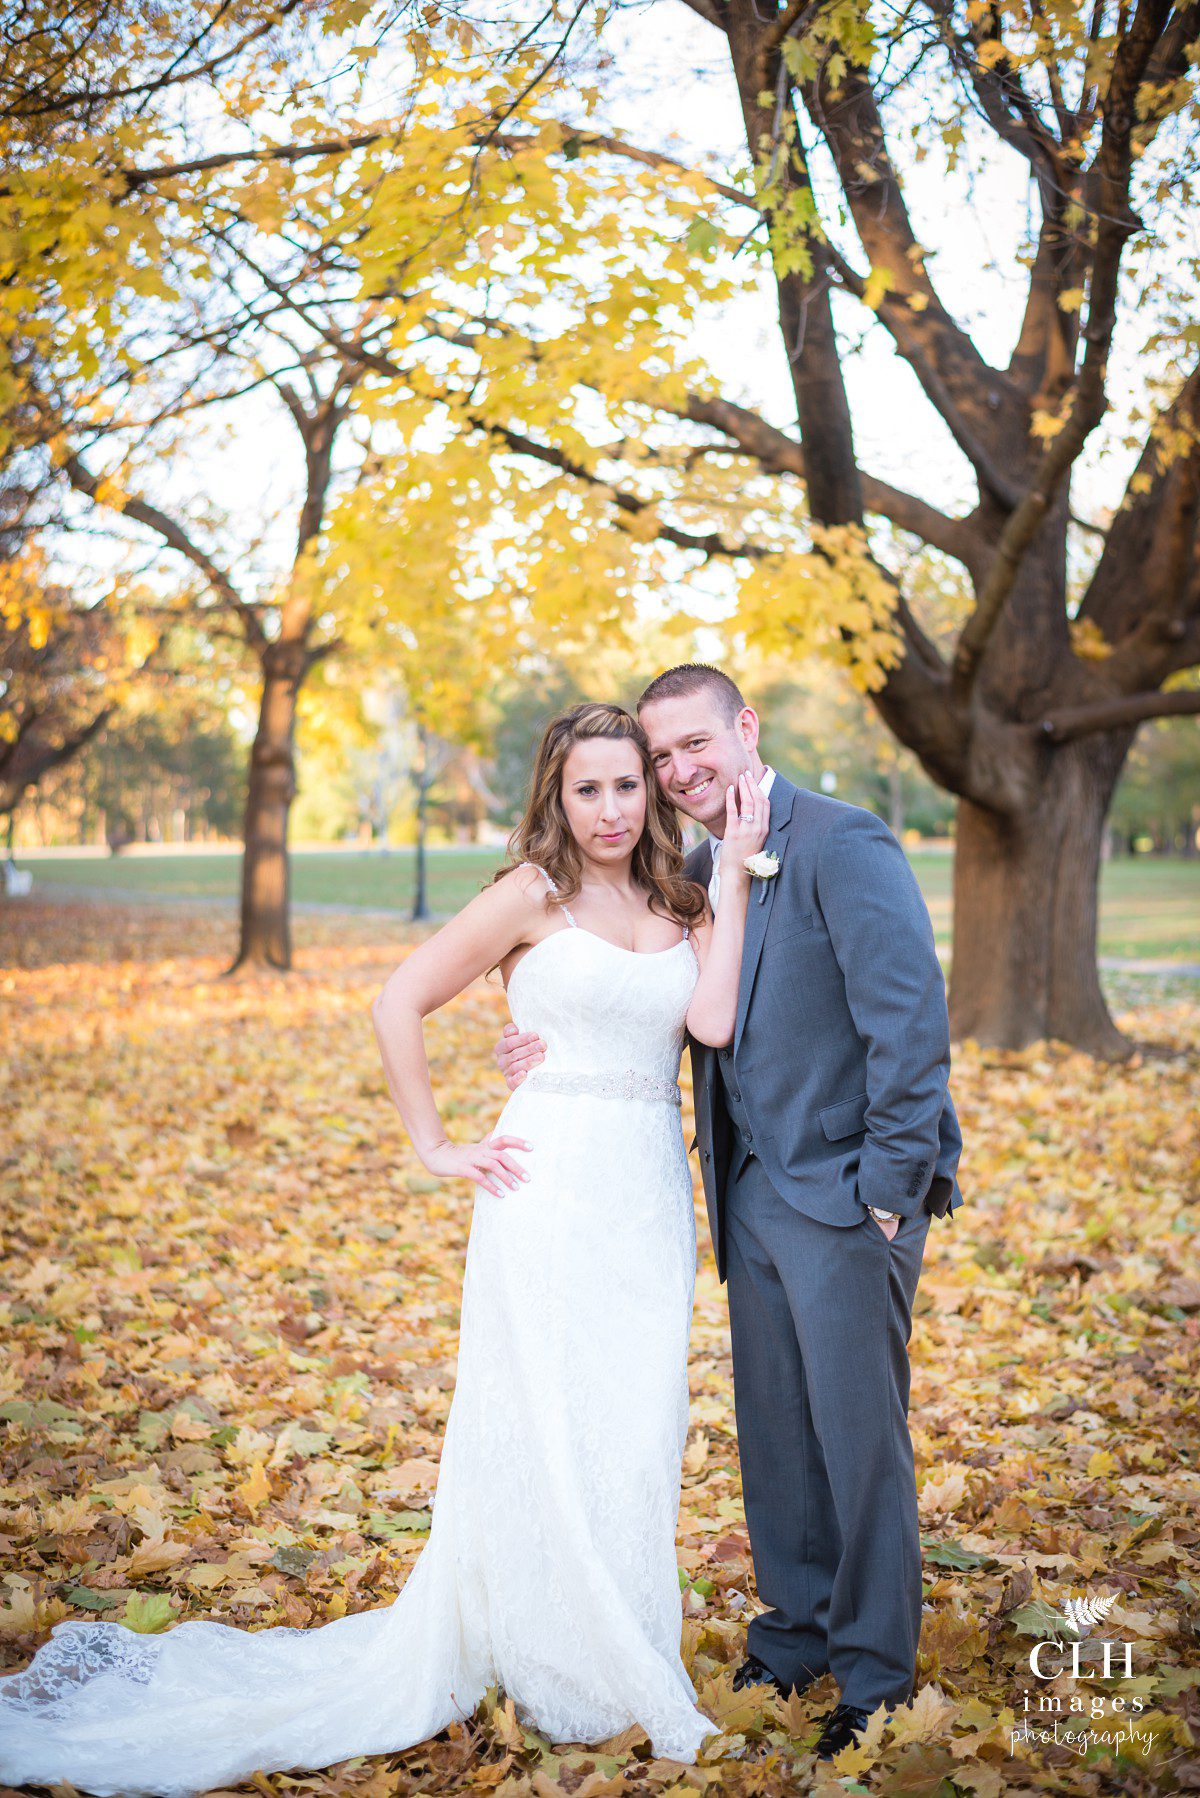 CLH images Photography - Gideon Putnam Wedding Photography - Saratoga Wedding Photographer - Capital District Wedding Photographer - Albany Wedding Photography - Sara and John (82)